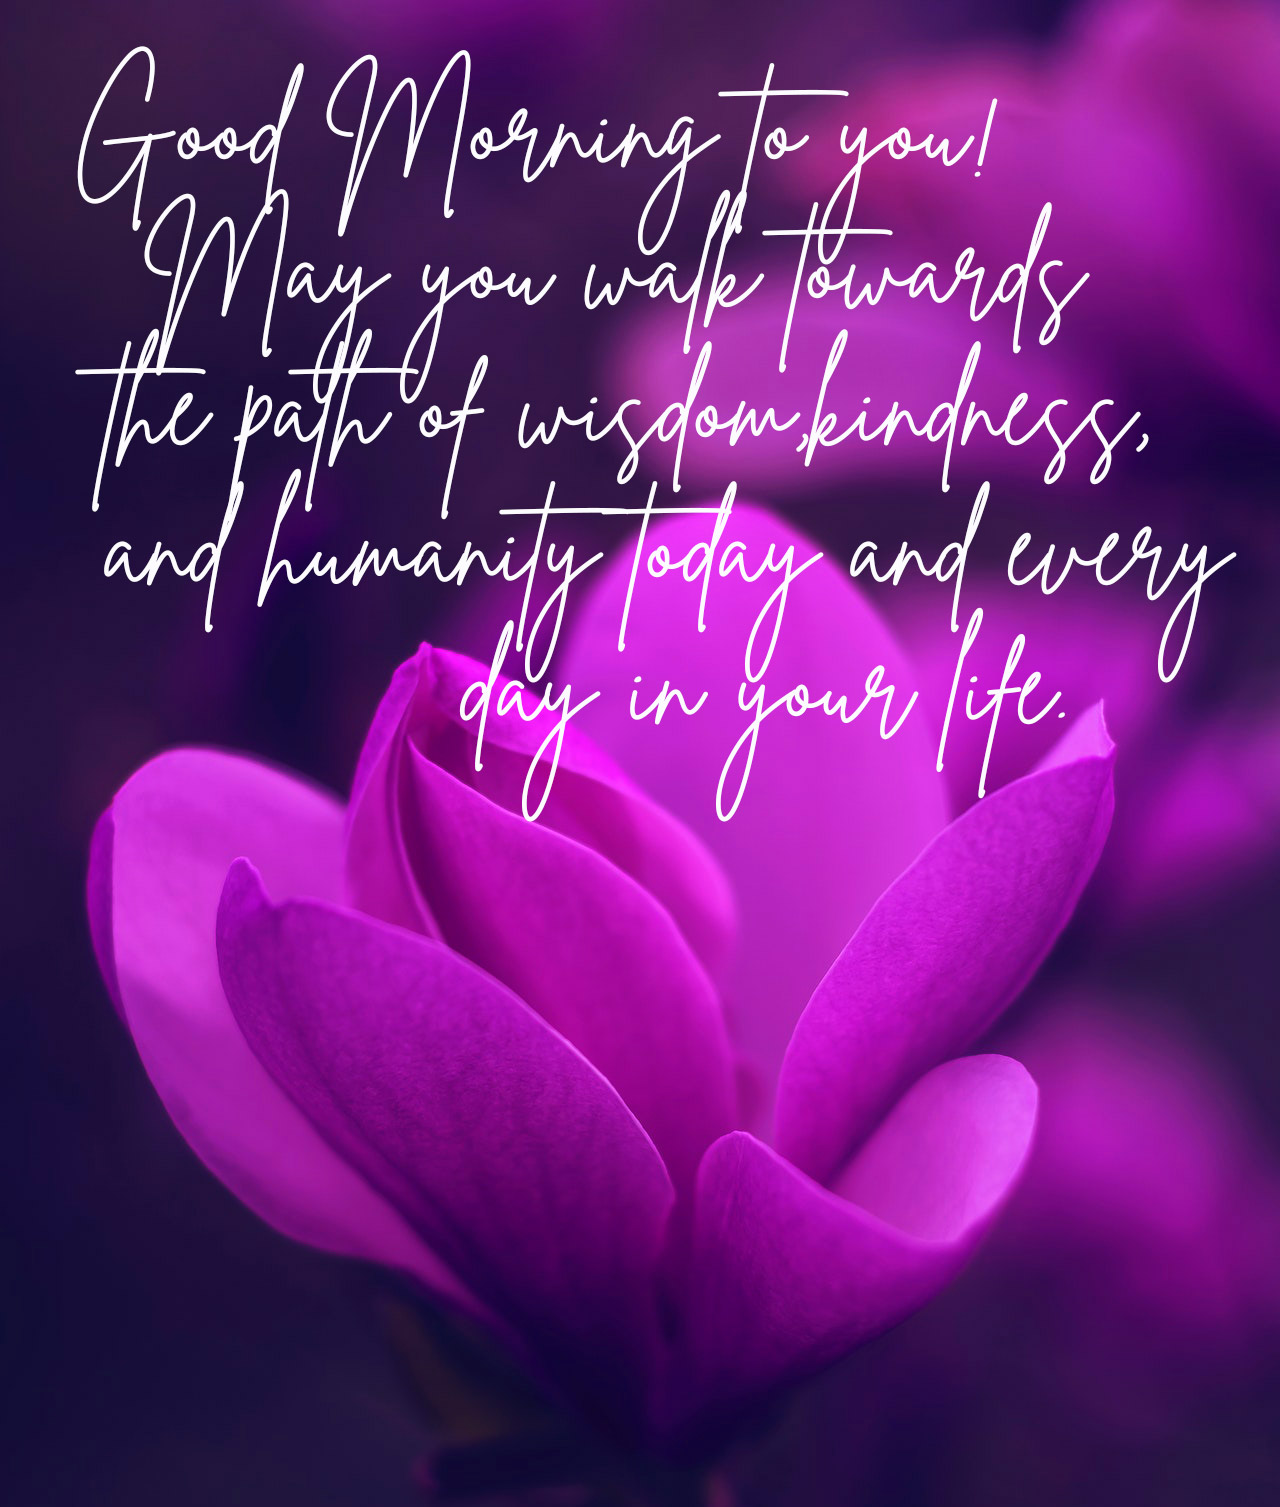 Spiritual Good Morning Messages - Good Morning Images HD